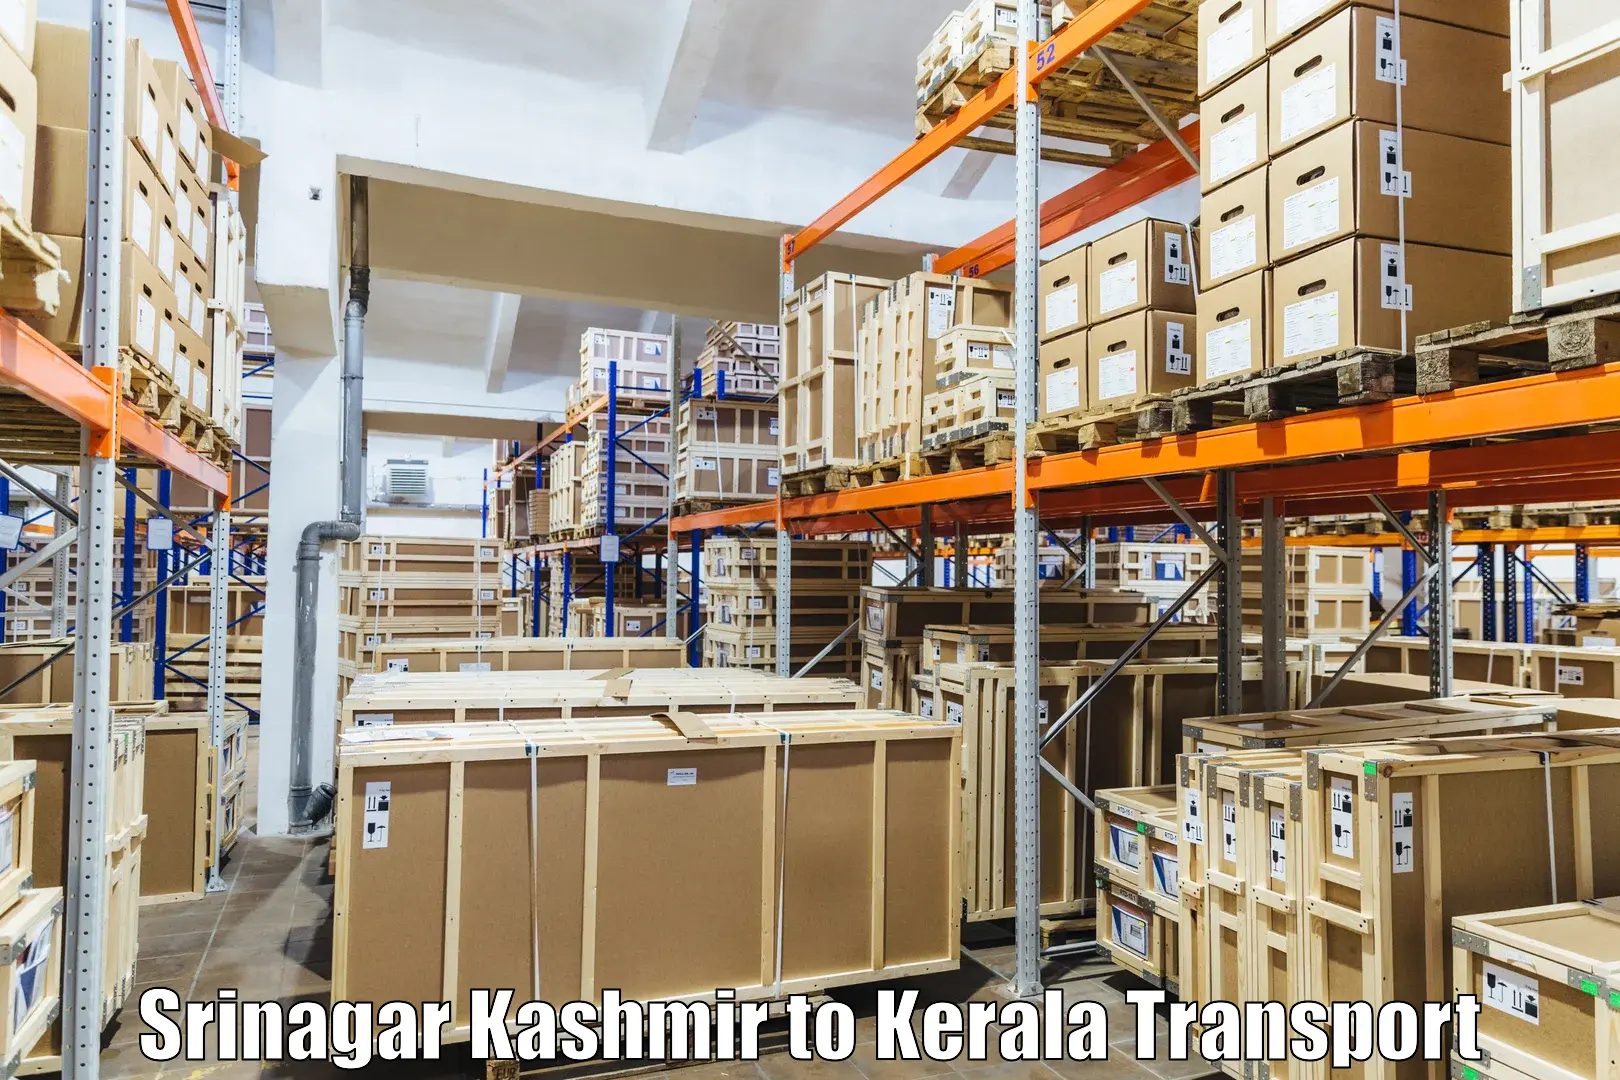 Nearby transport service Srinagar Kashmir to Kakkur